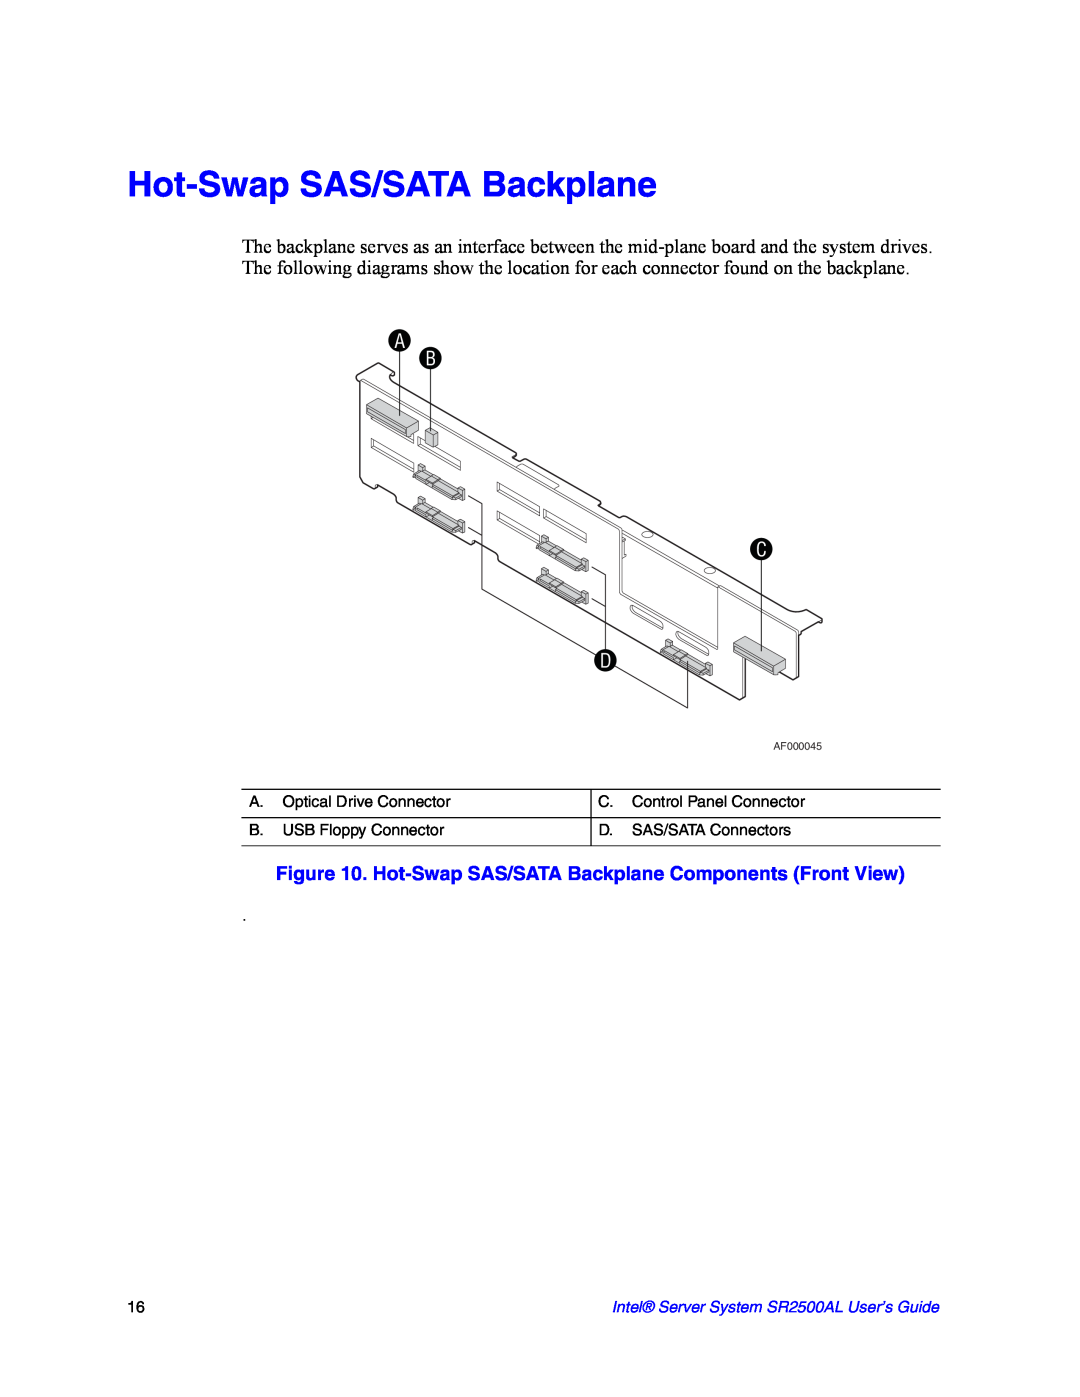 Intel manual A B C D, Hot-Swap SAS/SATA Backplane Components Front View, Intel Server System SR2500AL User’s Guide 